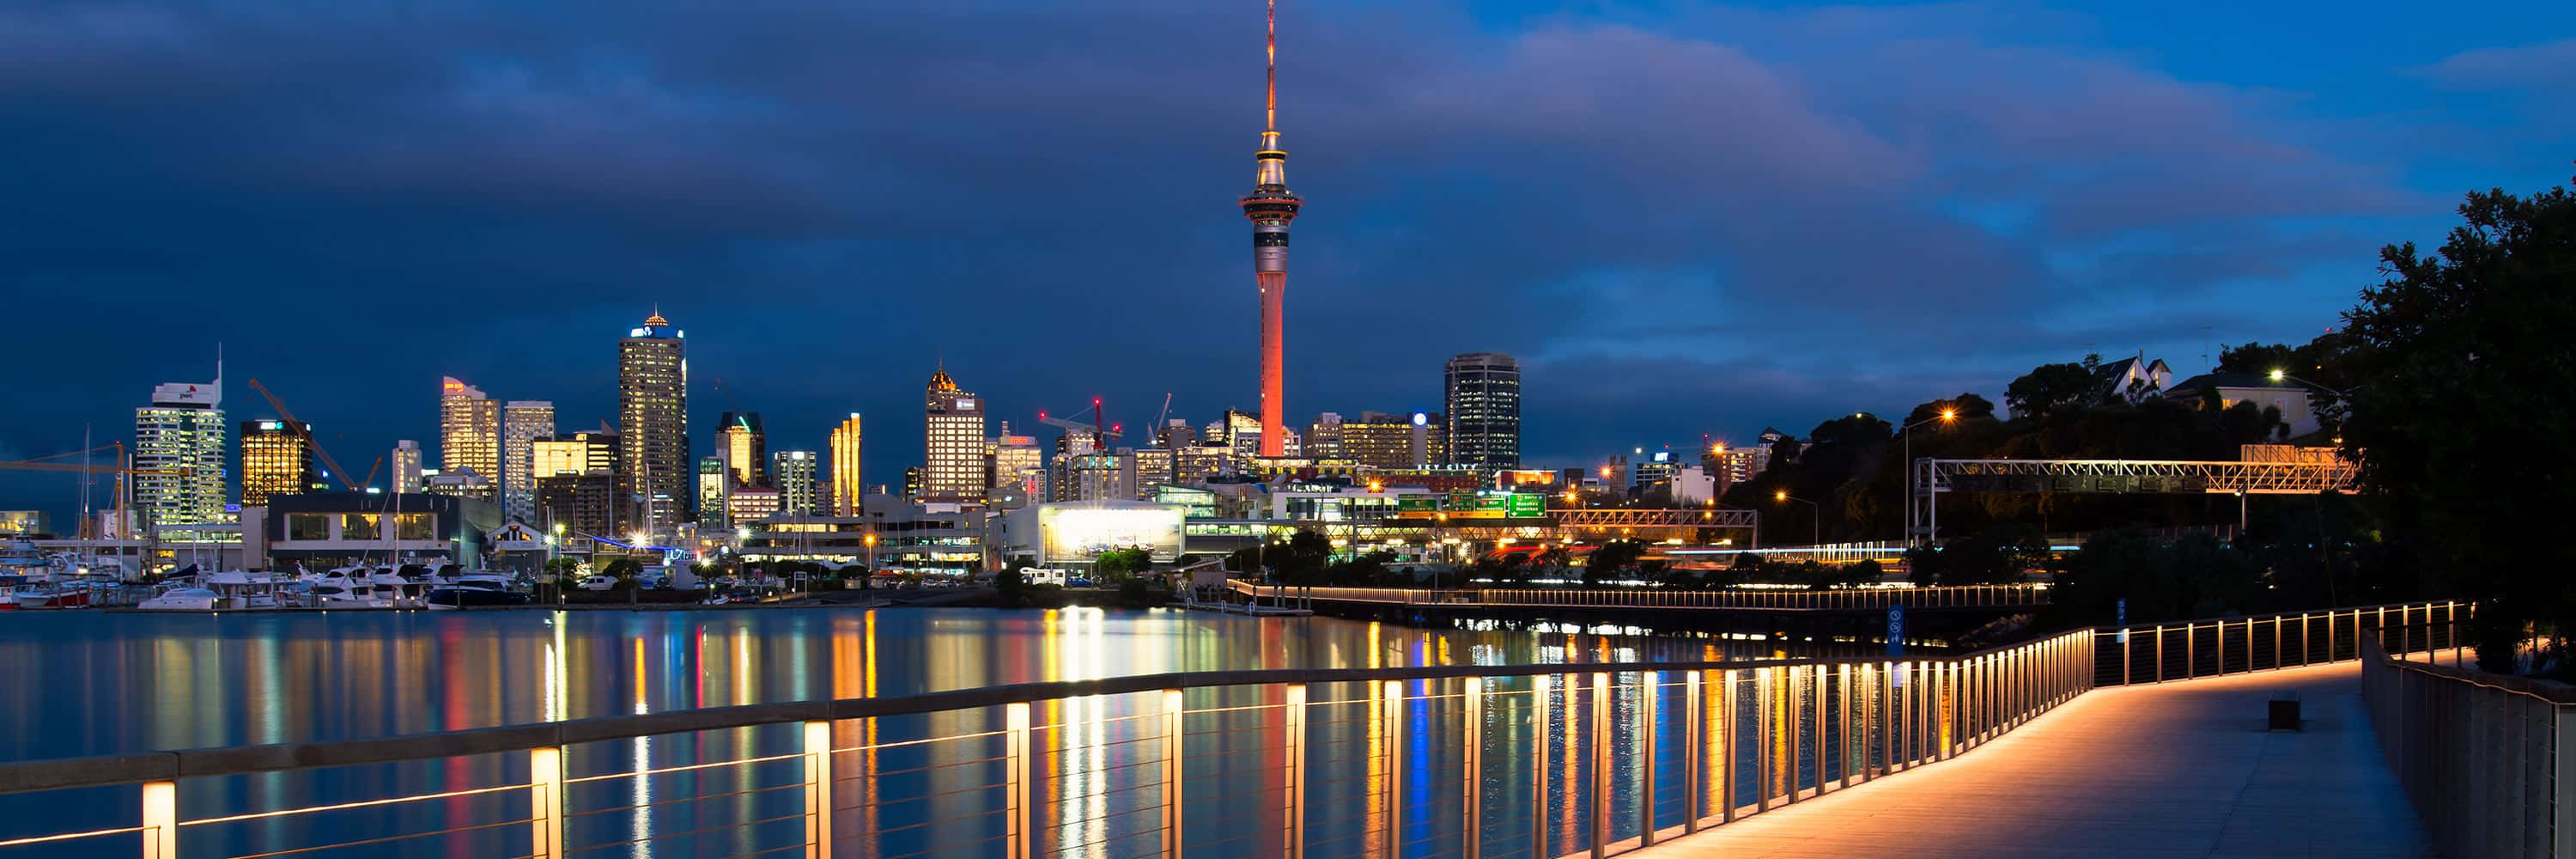 Auckland Skylineat Twilight Wallpaper